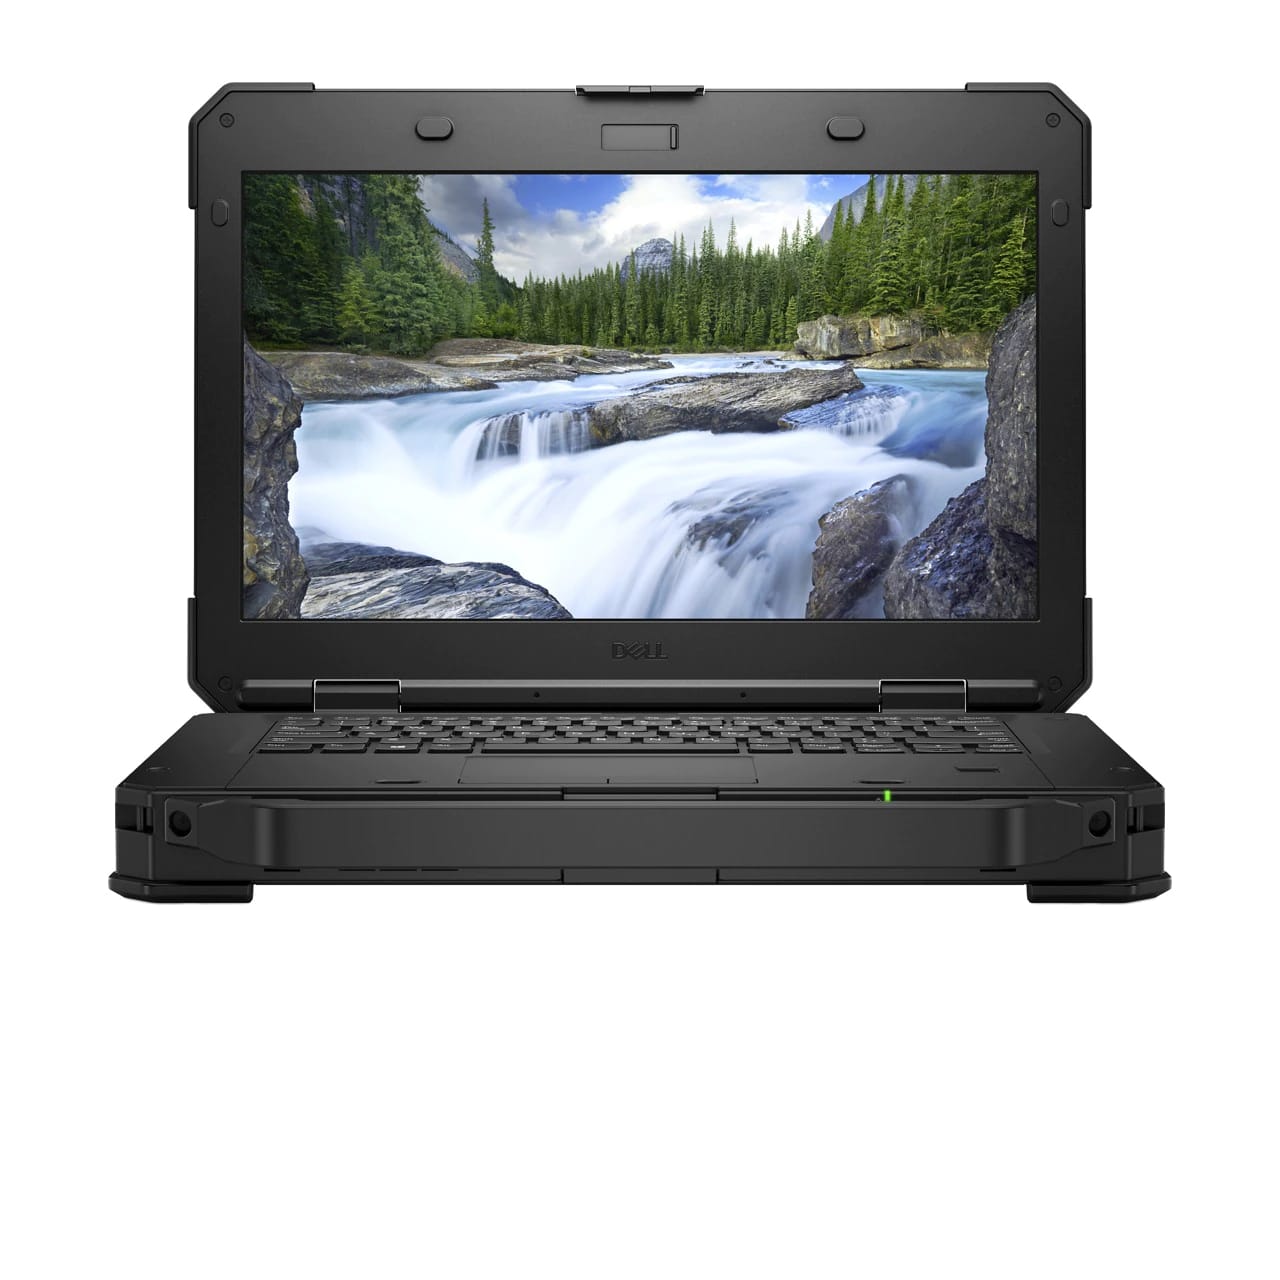 BSB-VLIYSPIQ5DCUFD1E-NEW-NEW-LAP-DL 2019 Dell Latitude Rugged 5424 Laptop 14" - i5 - i5-8350U - Quad Core 3.6Ghz - 128GB SSD - 8GB RAM - 1920x1080 FHD Touchscreen - Windows 10 Pro Black